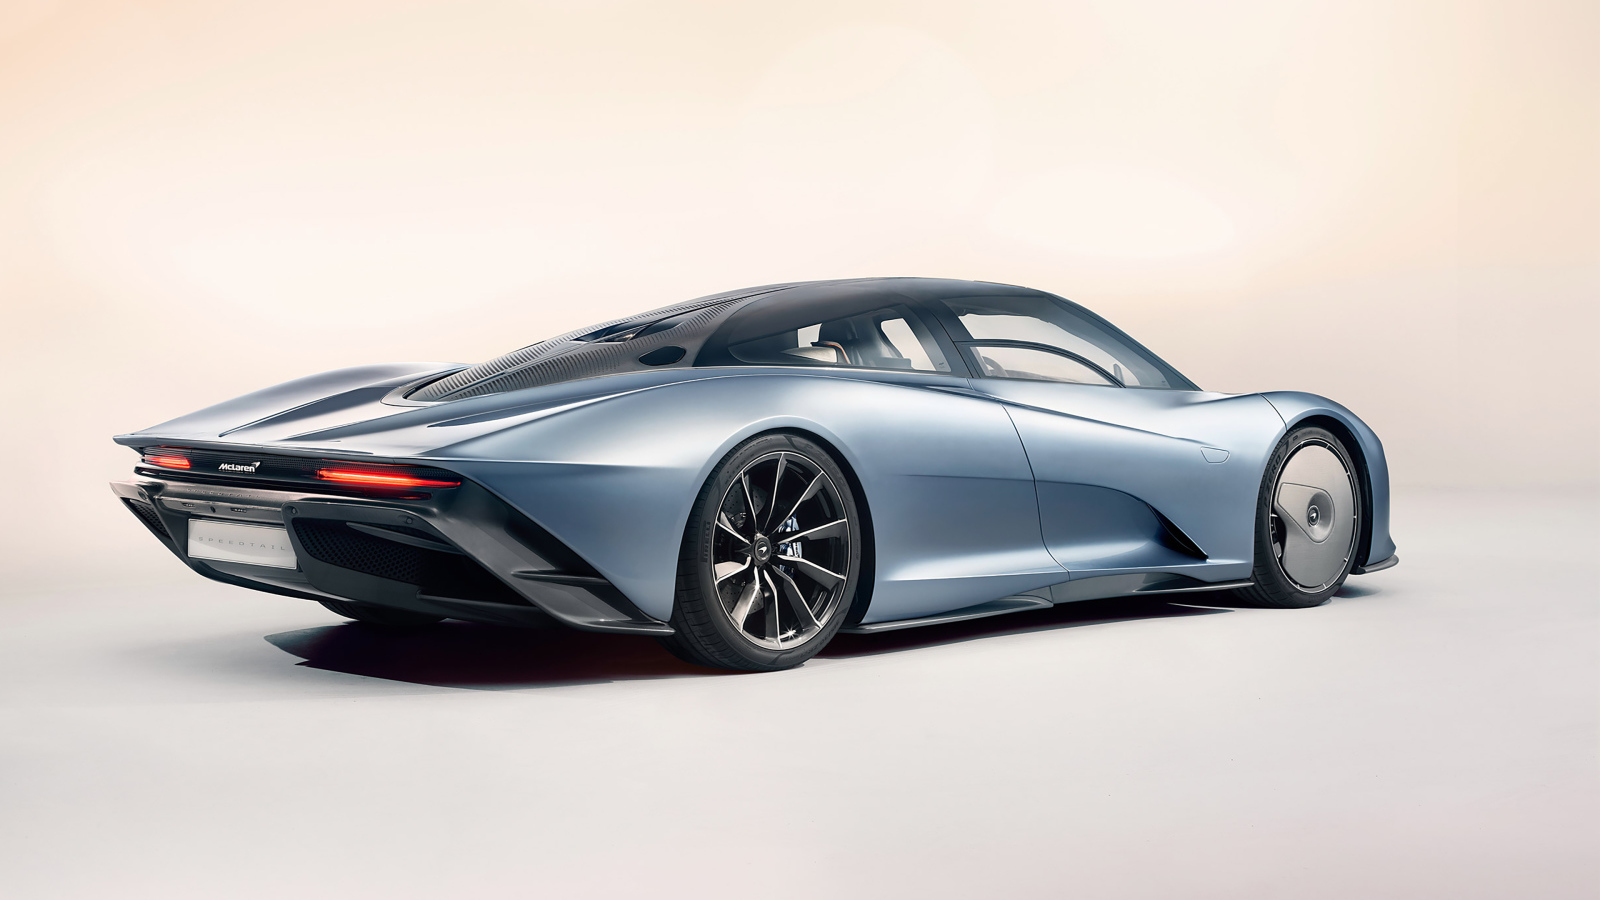 Fast expensive car McLaren Speedtail, 2020 rear view